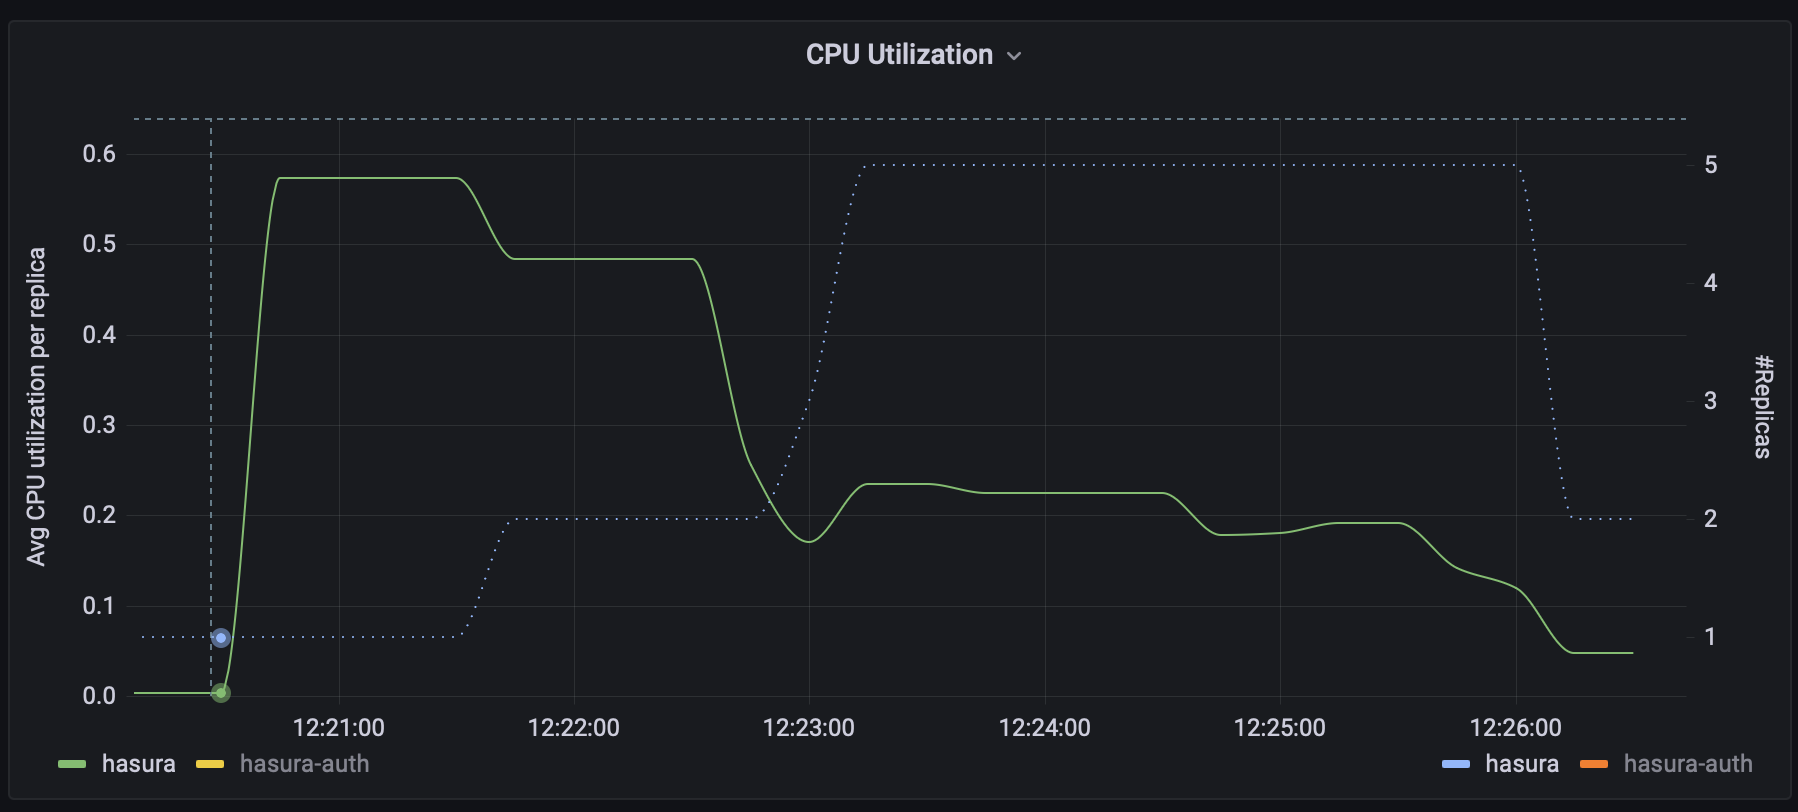 Average CPU Utilization per Replica vs # Replicas (hasura)